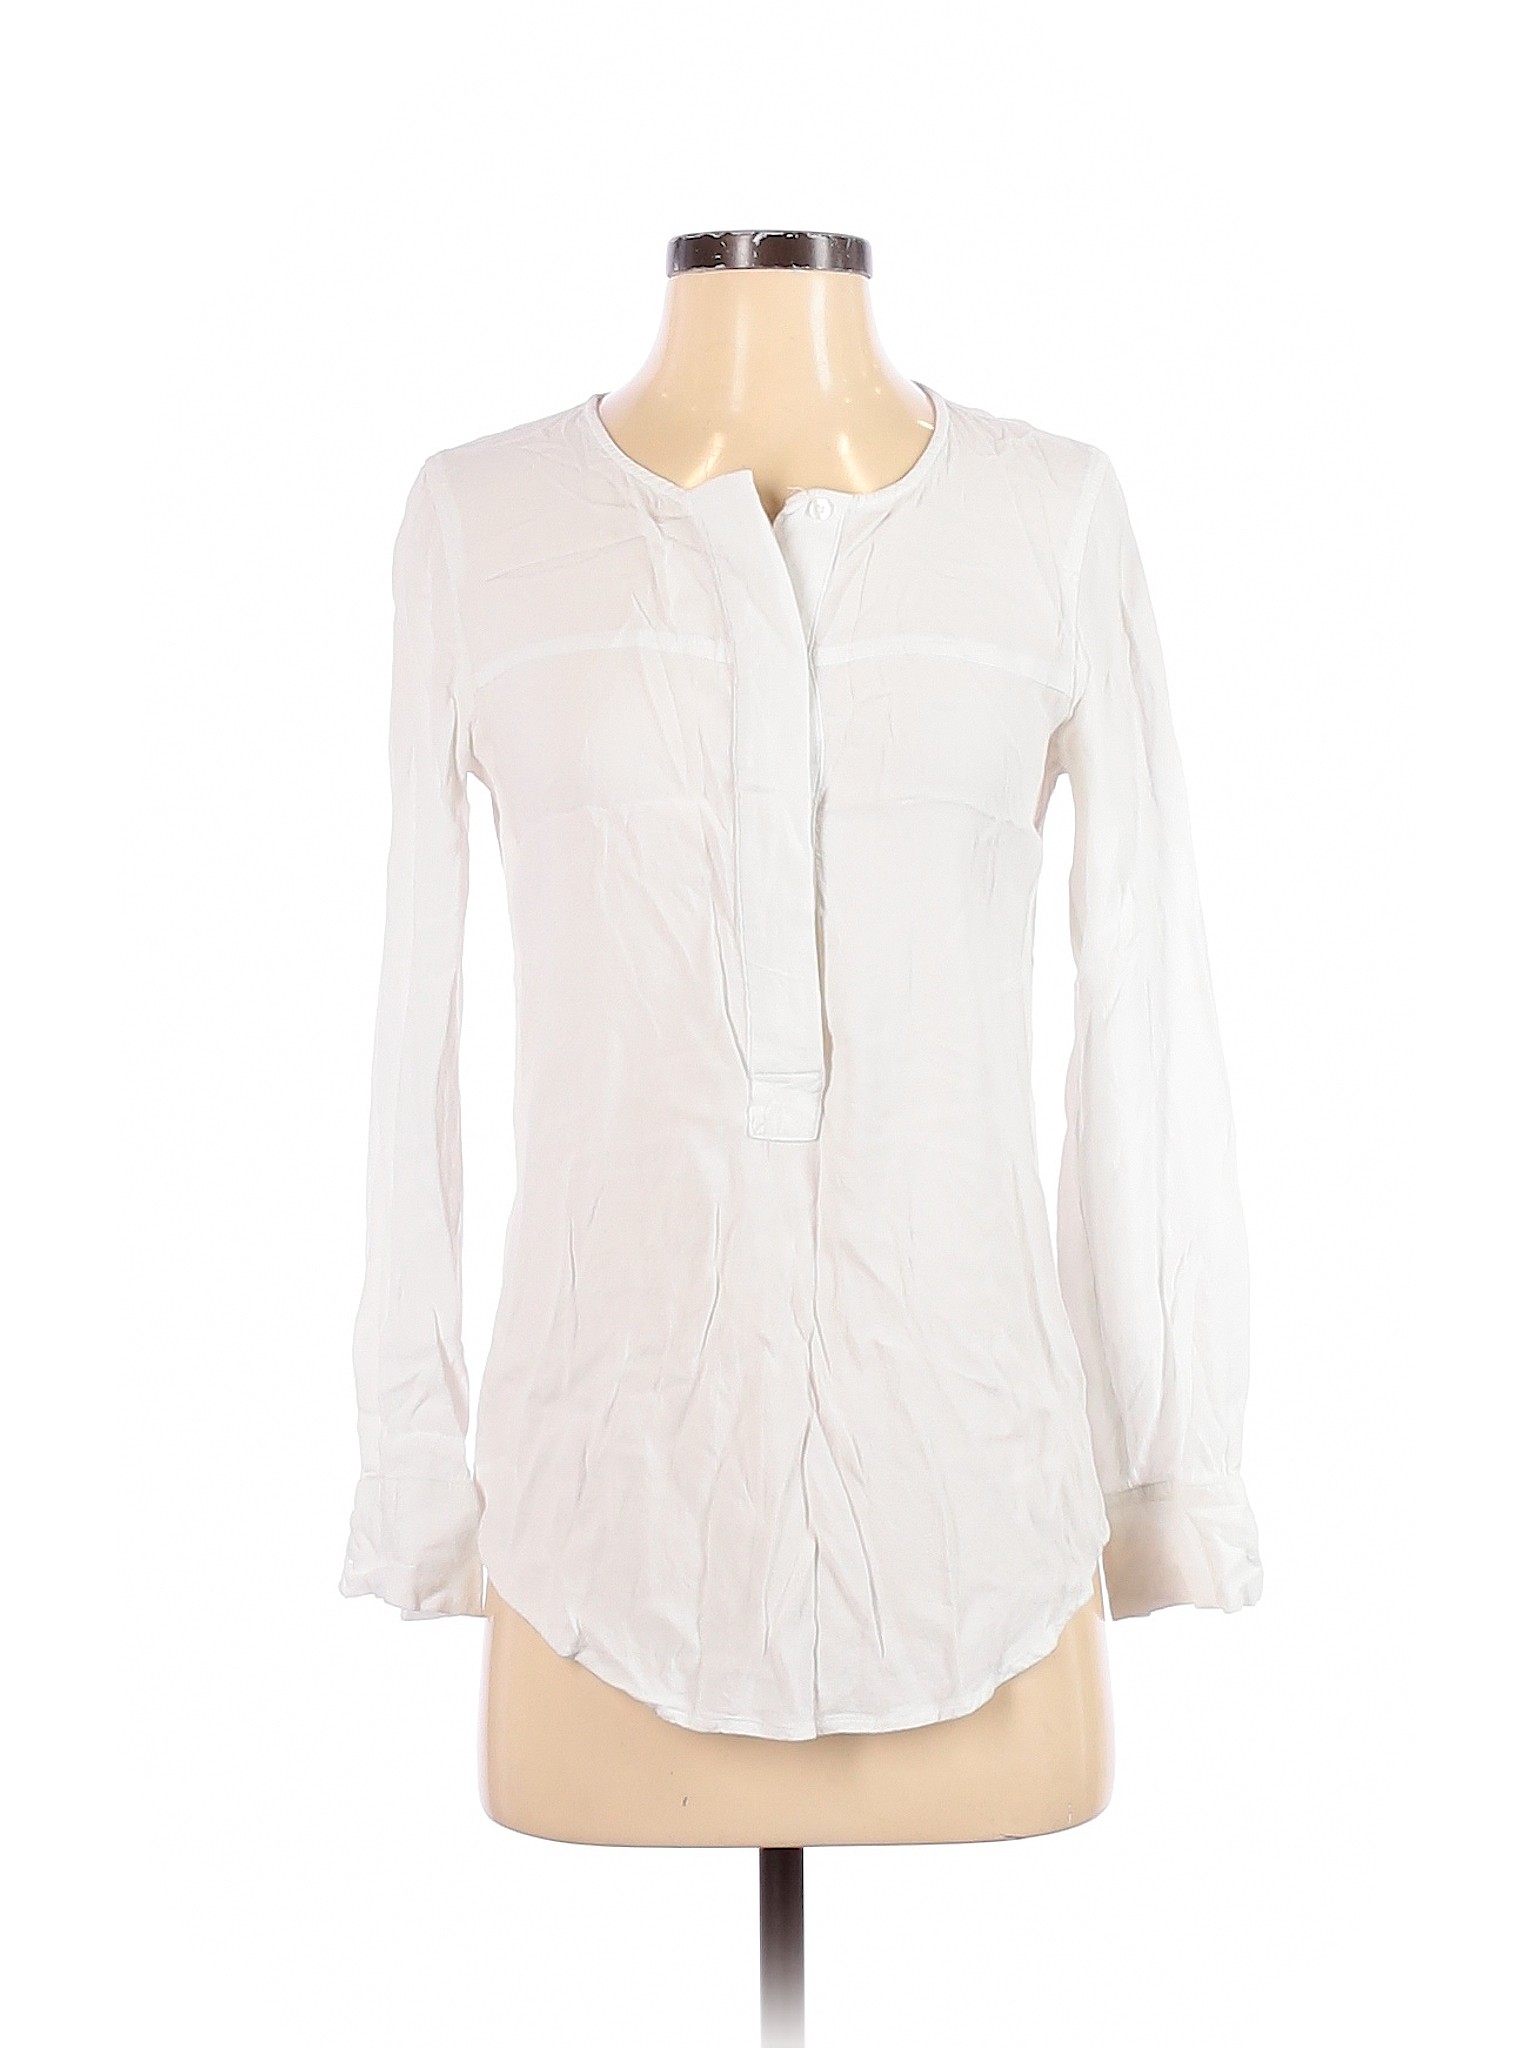 J.Crew Women White Long Sleeve Button-Down Shirt XS | eBay